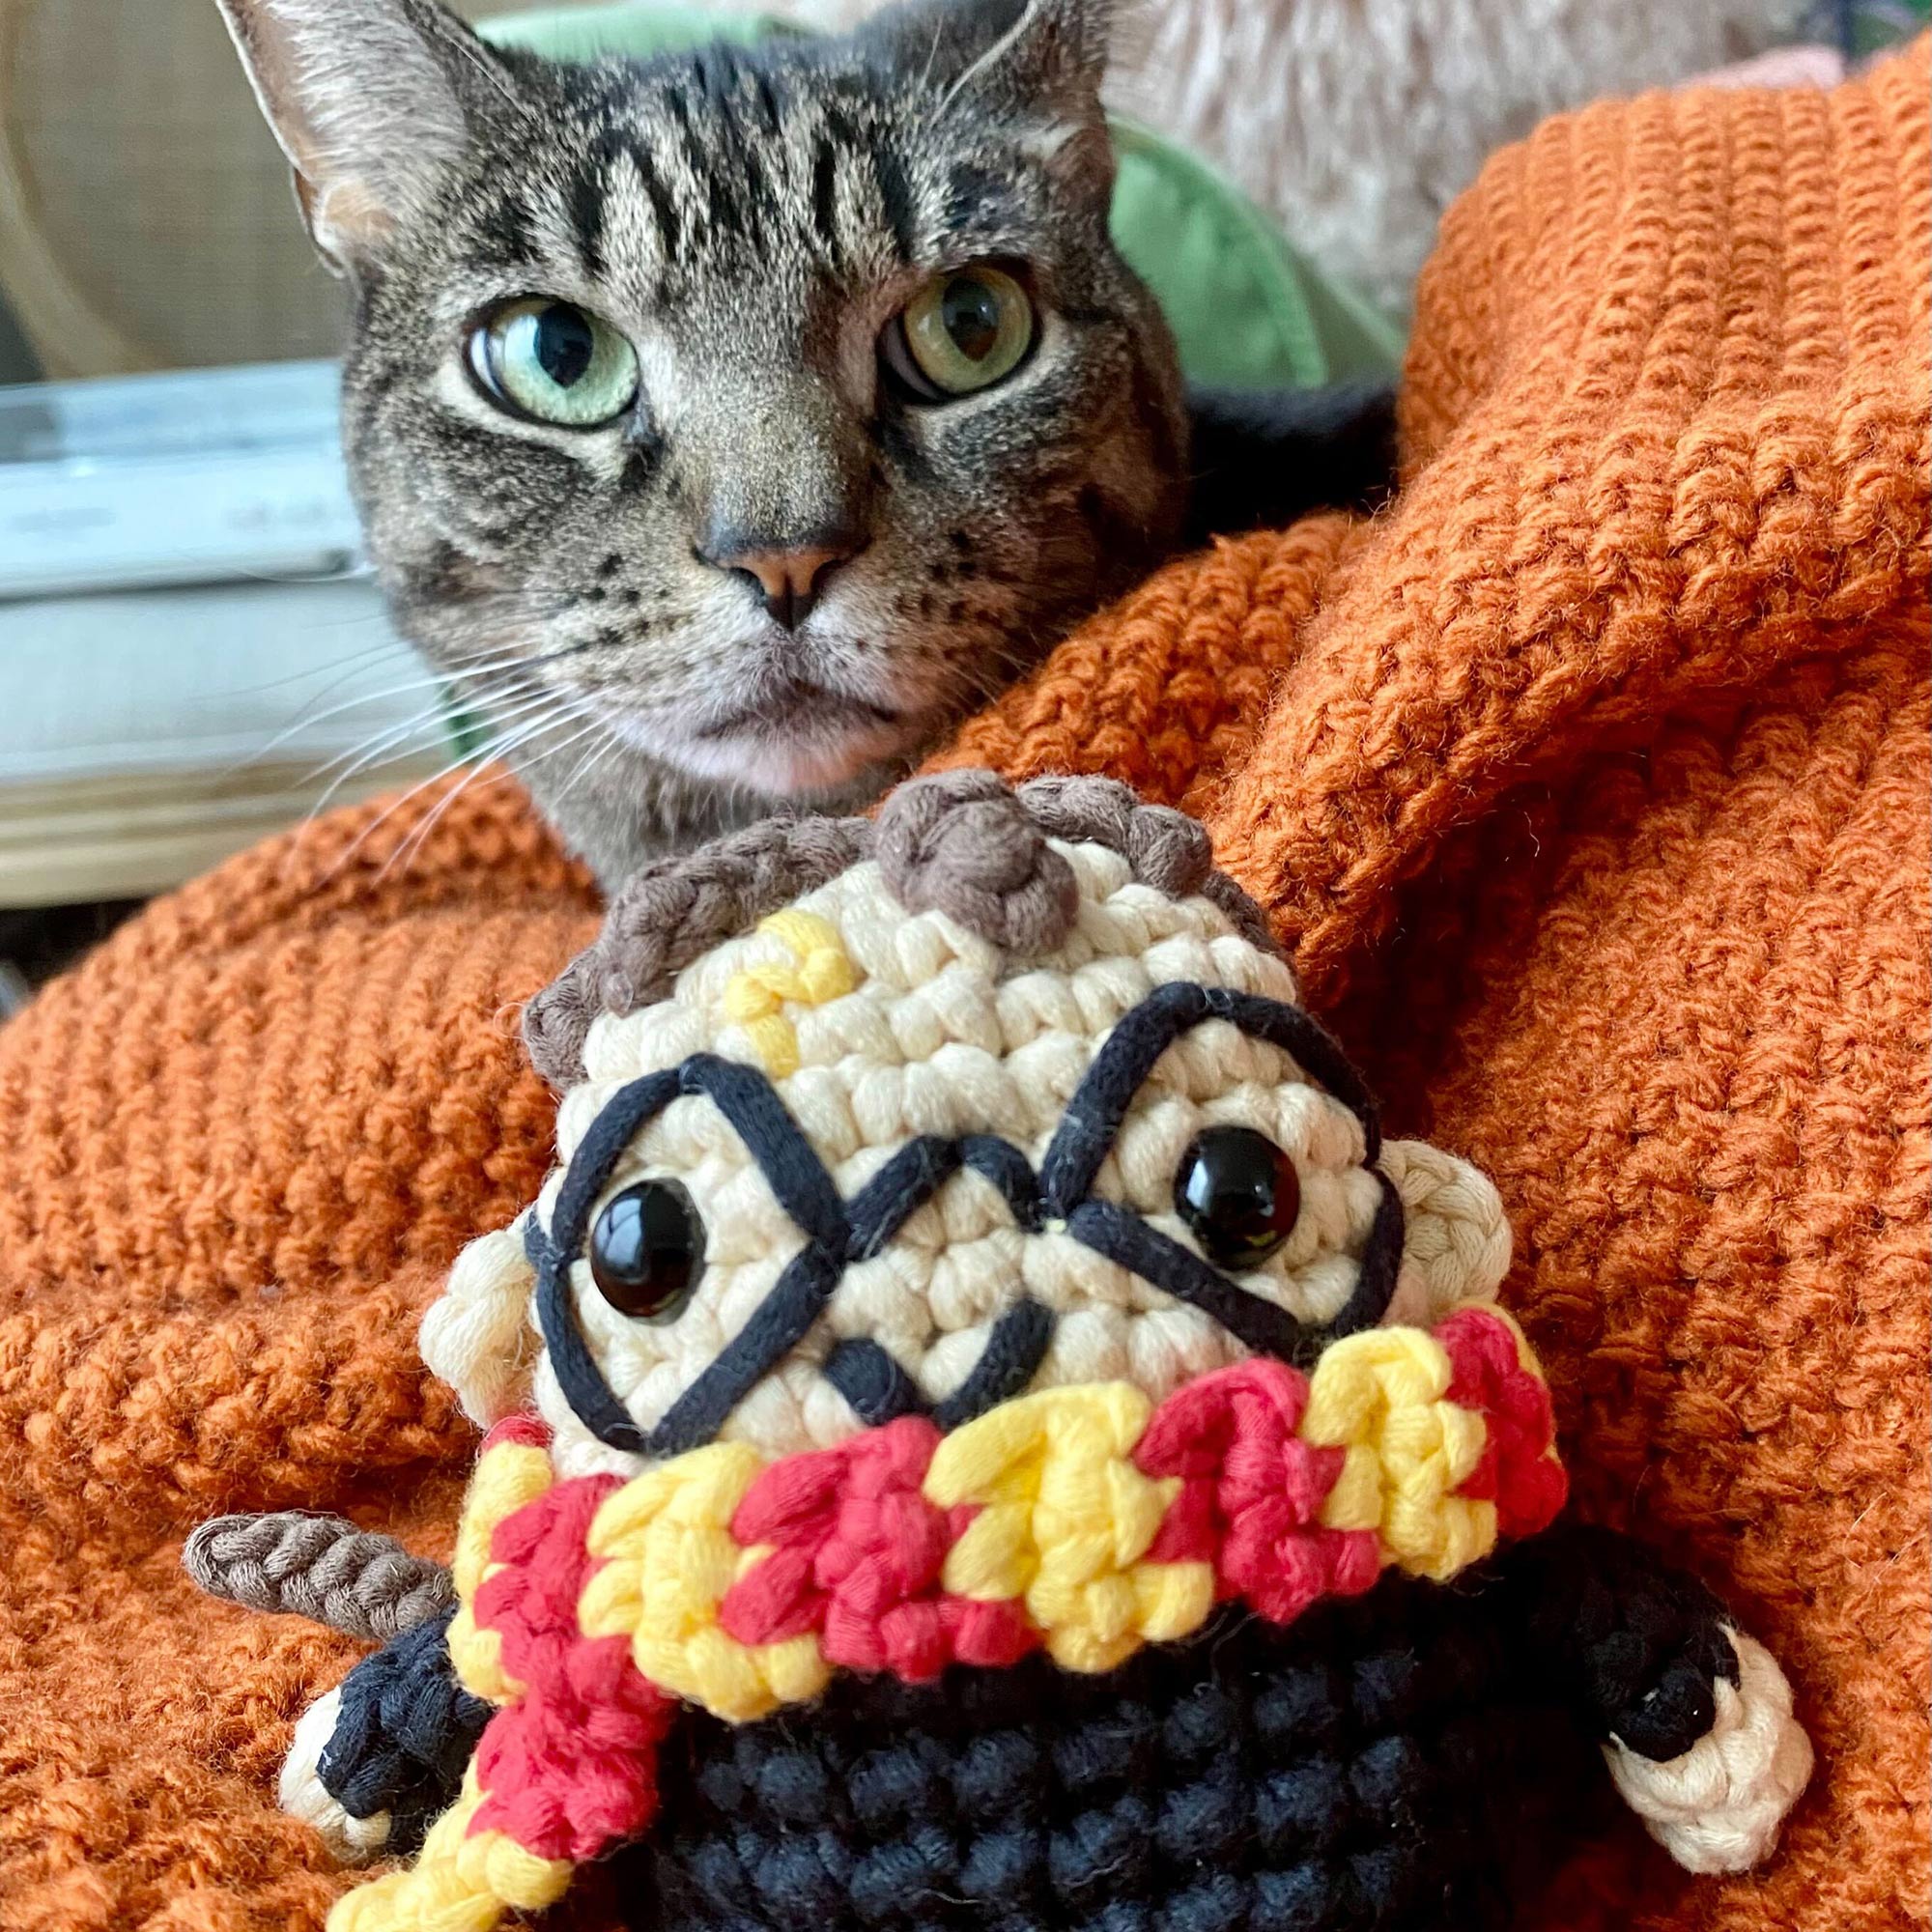 The Woobles Harry Potter crochet kits